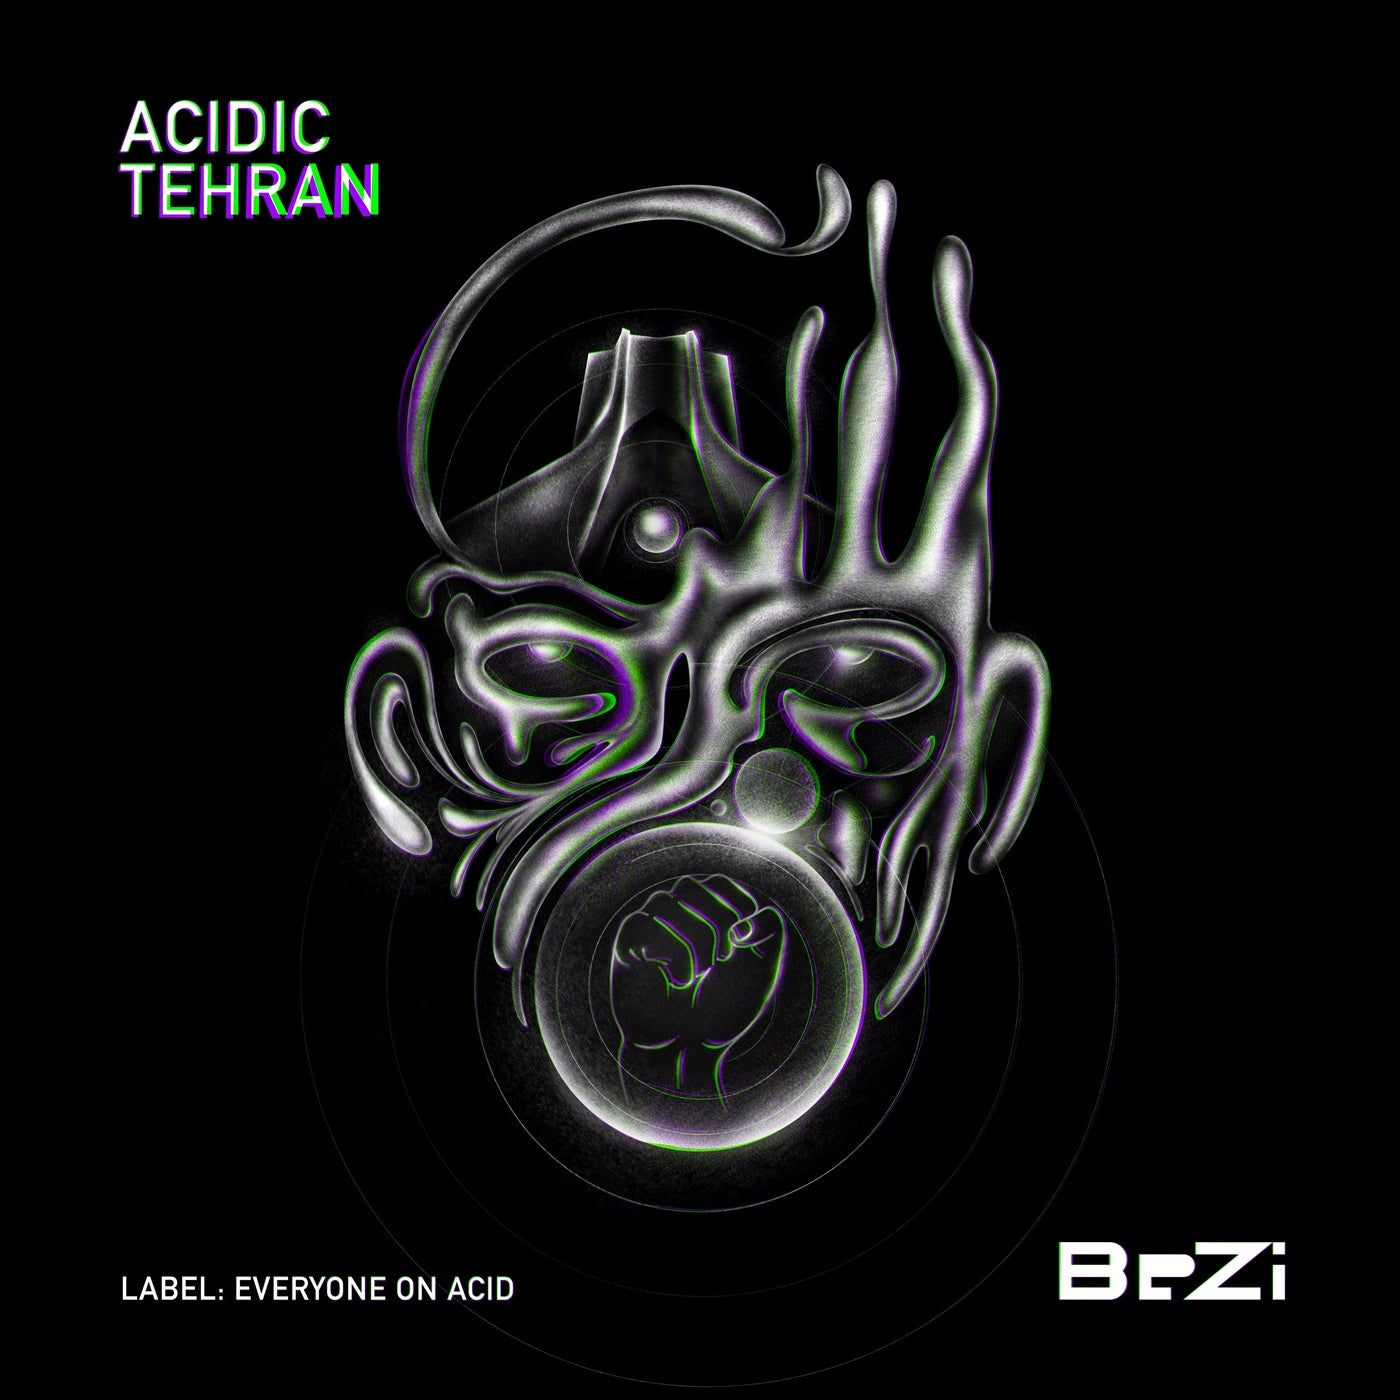 Acidic Tehran - Alternate Version